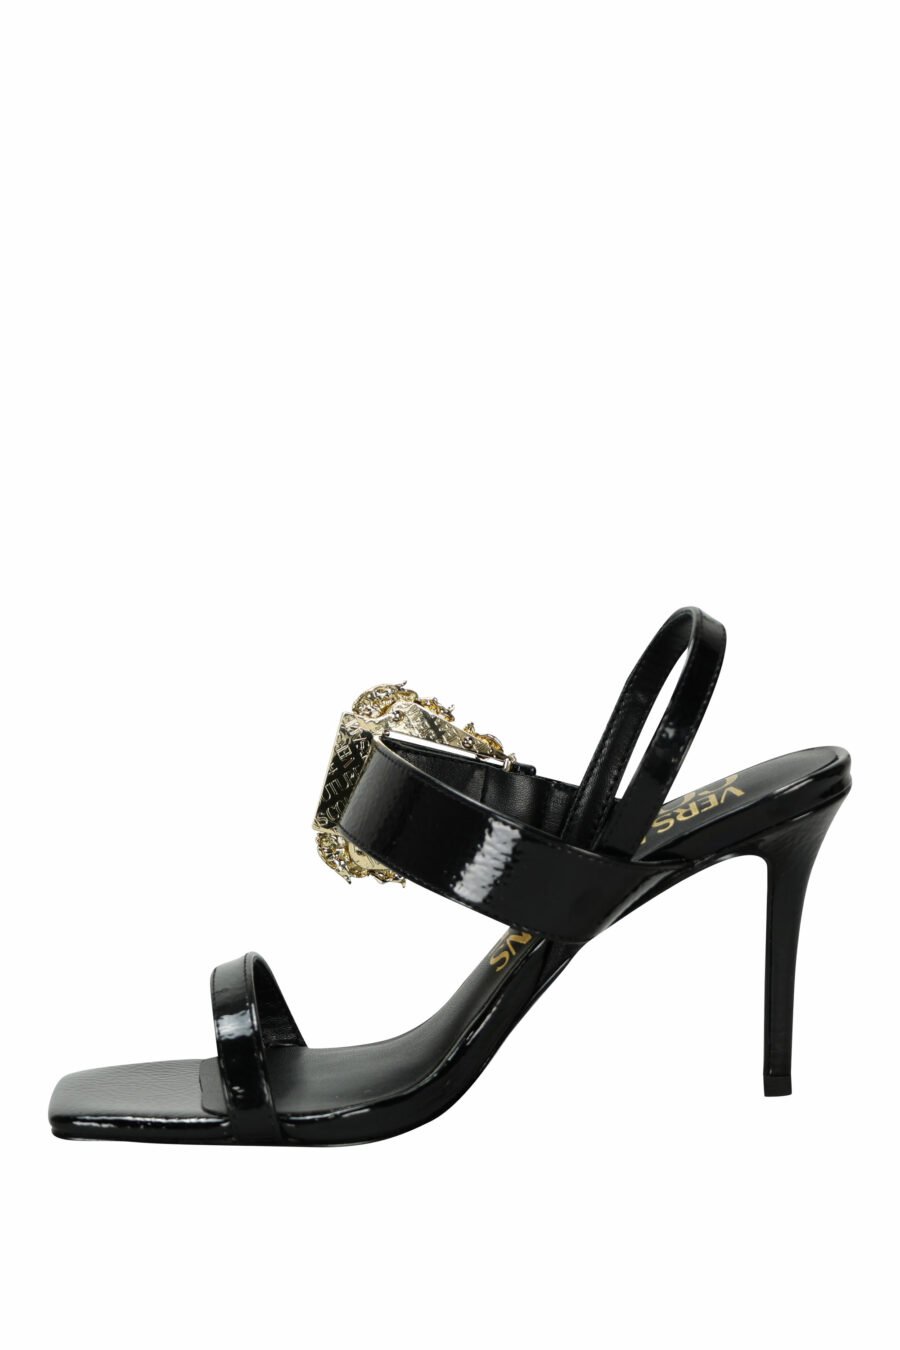 Black stiletto heels with gold baroque buckle - 8052019607789 2